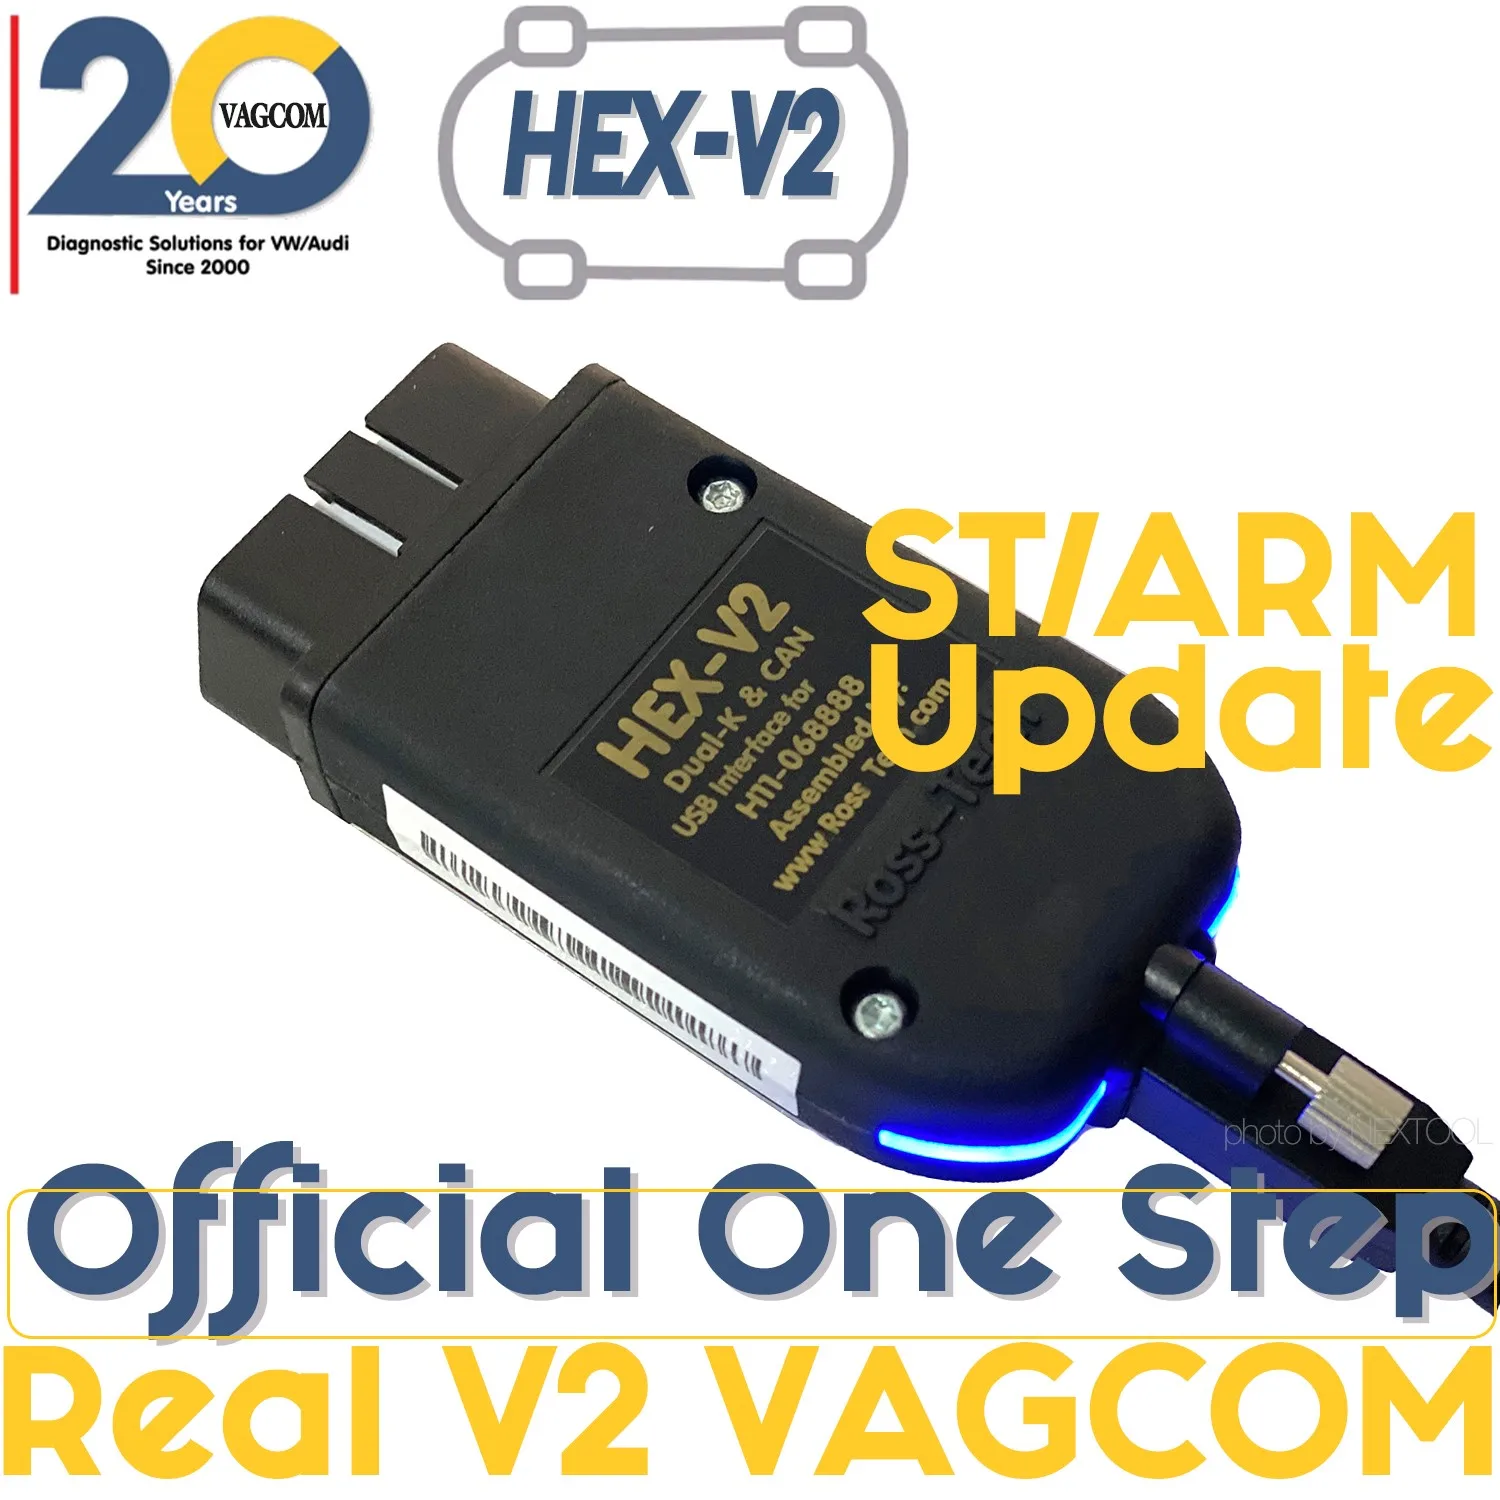 

Official Use Direct VAGCOM 21.3.0 English Version For AU US GB IE CA VW-AUDi Owner Without Loader VII PLUS IDRefresh&Lanuch 1st